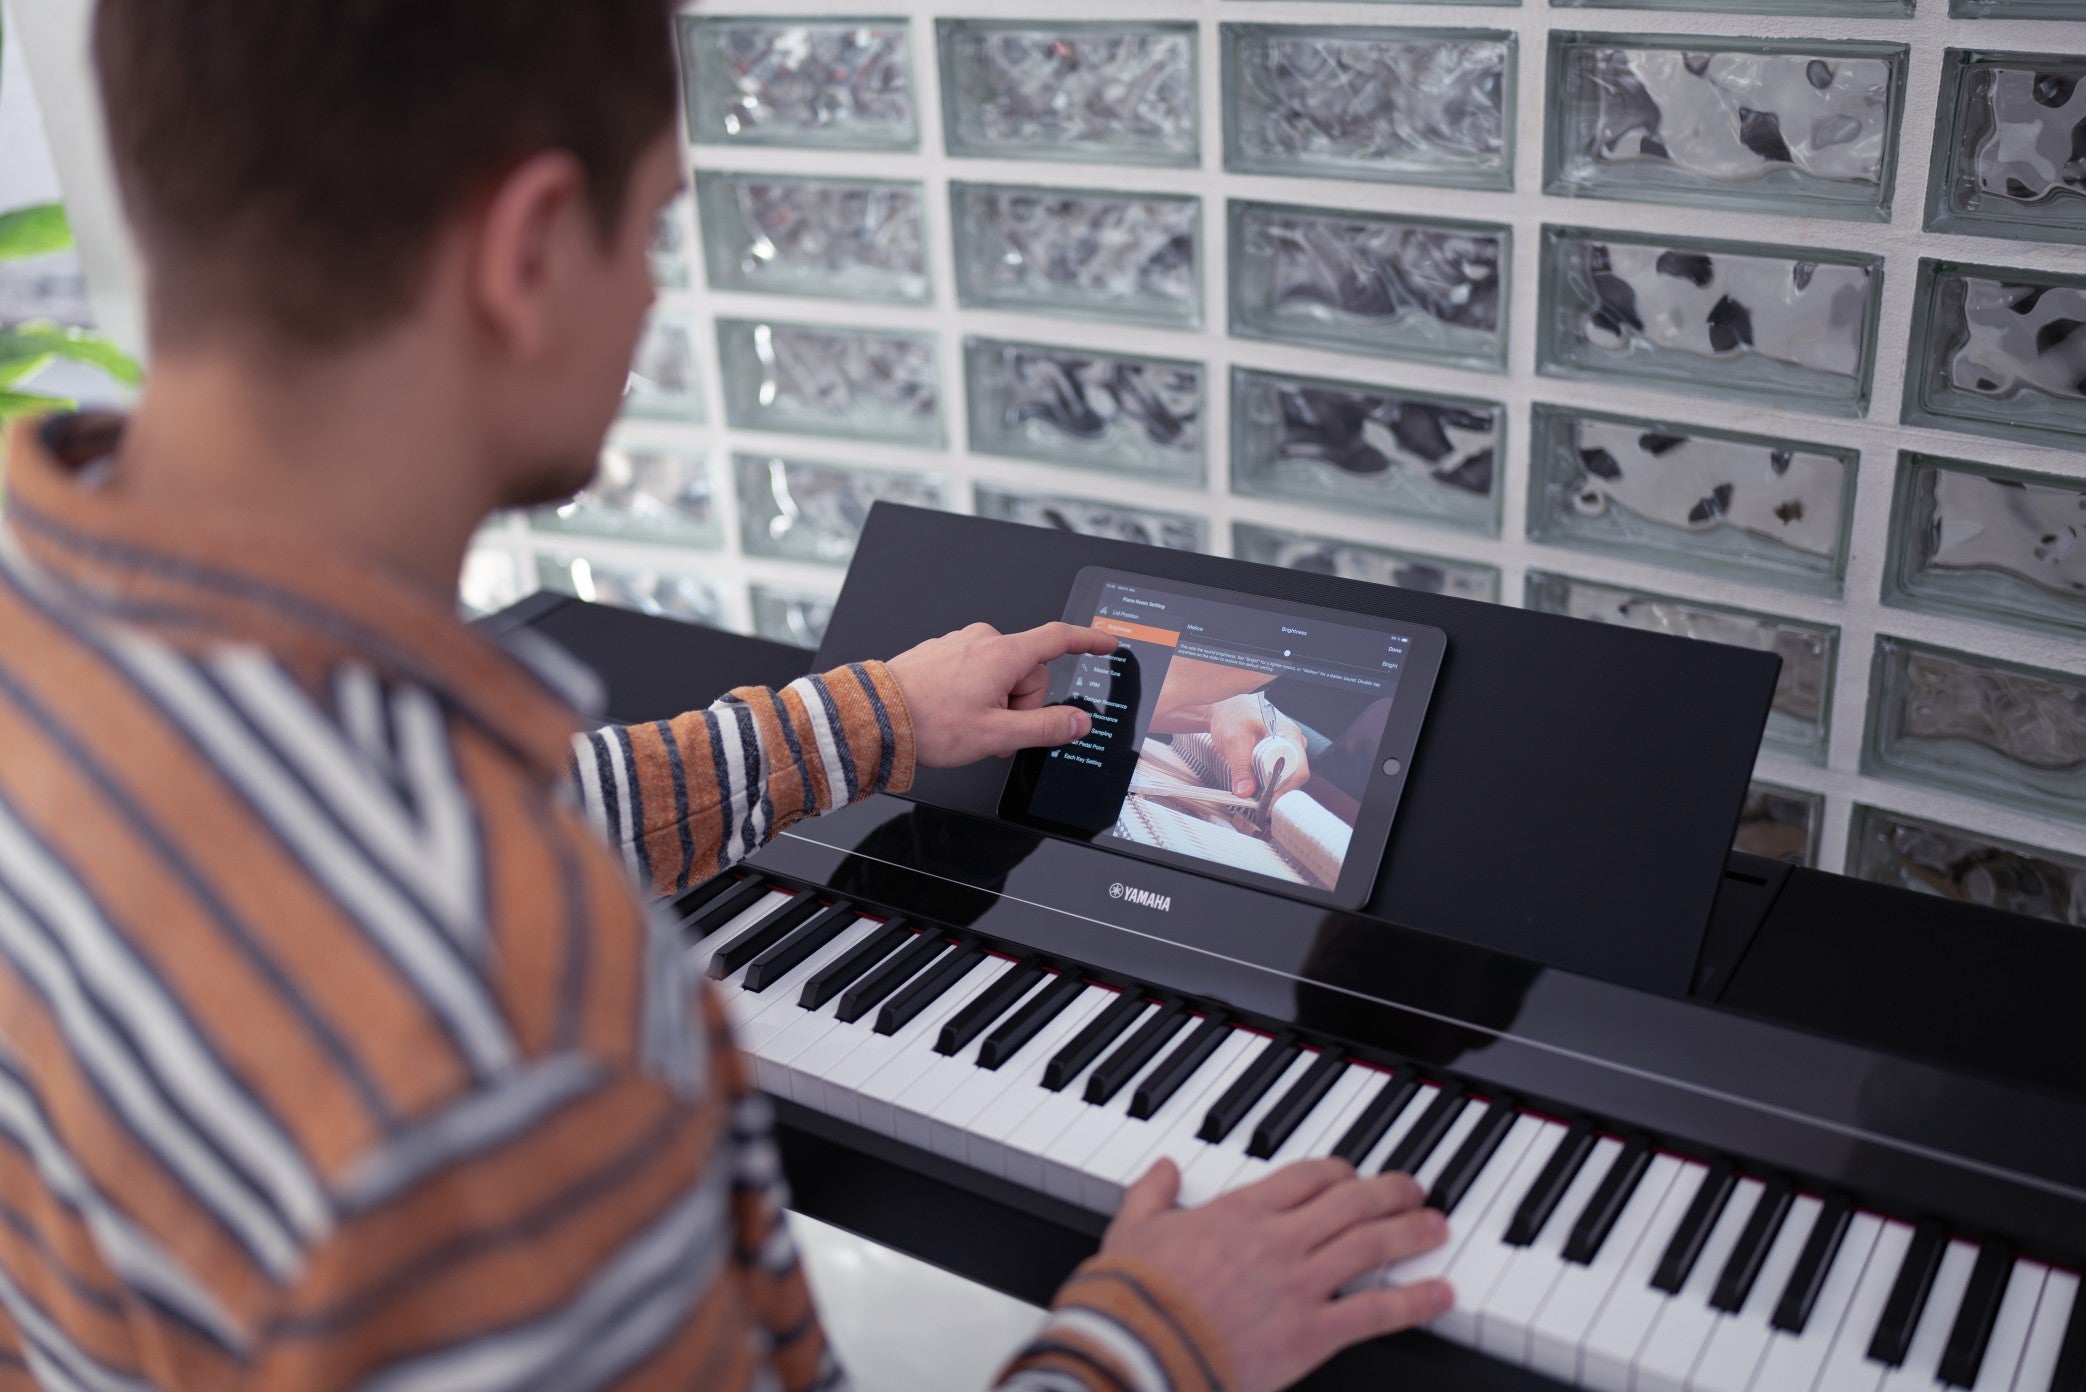 Yamaha PS500 Portable Smart Piano